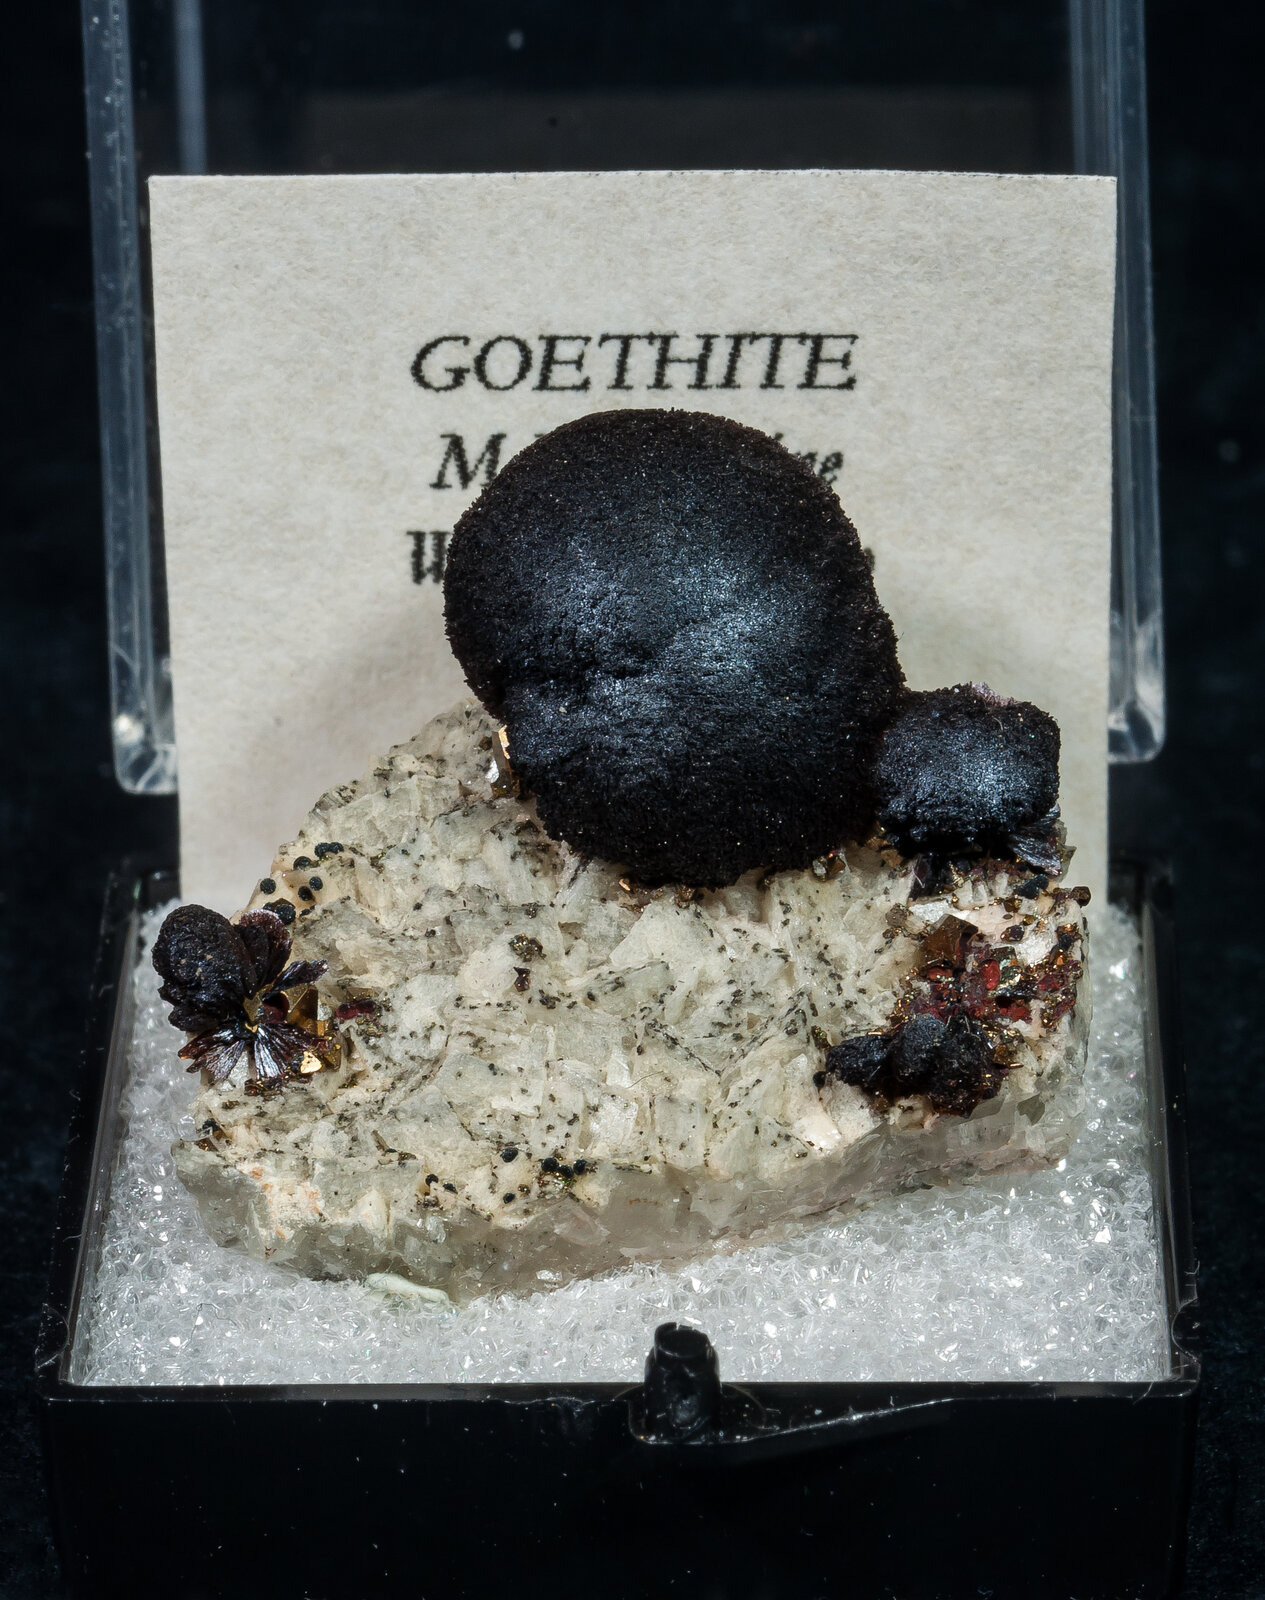 specimens/s_imagesAN7/Goethite-TTM13AN7f1.jpg